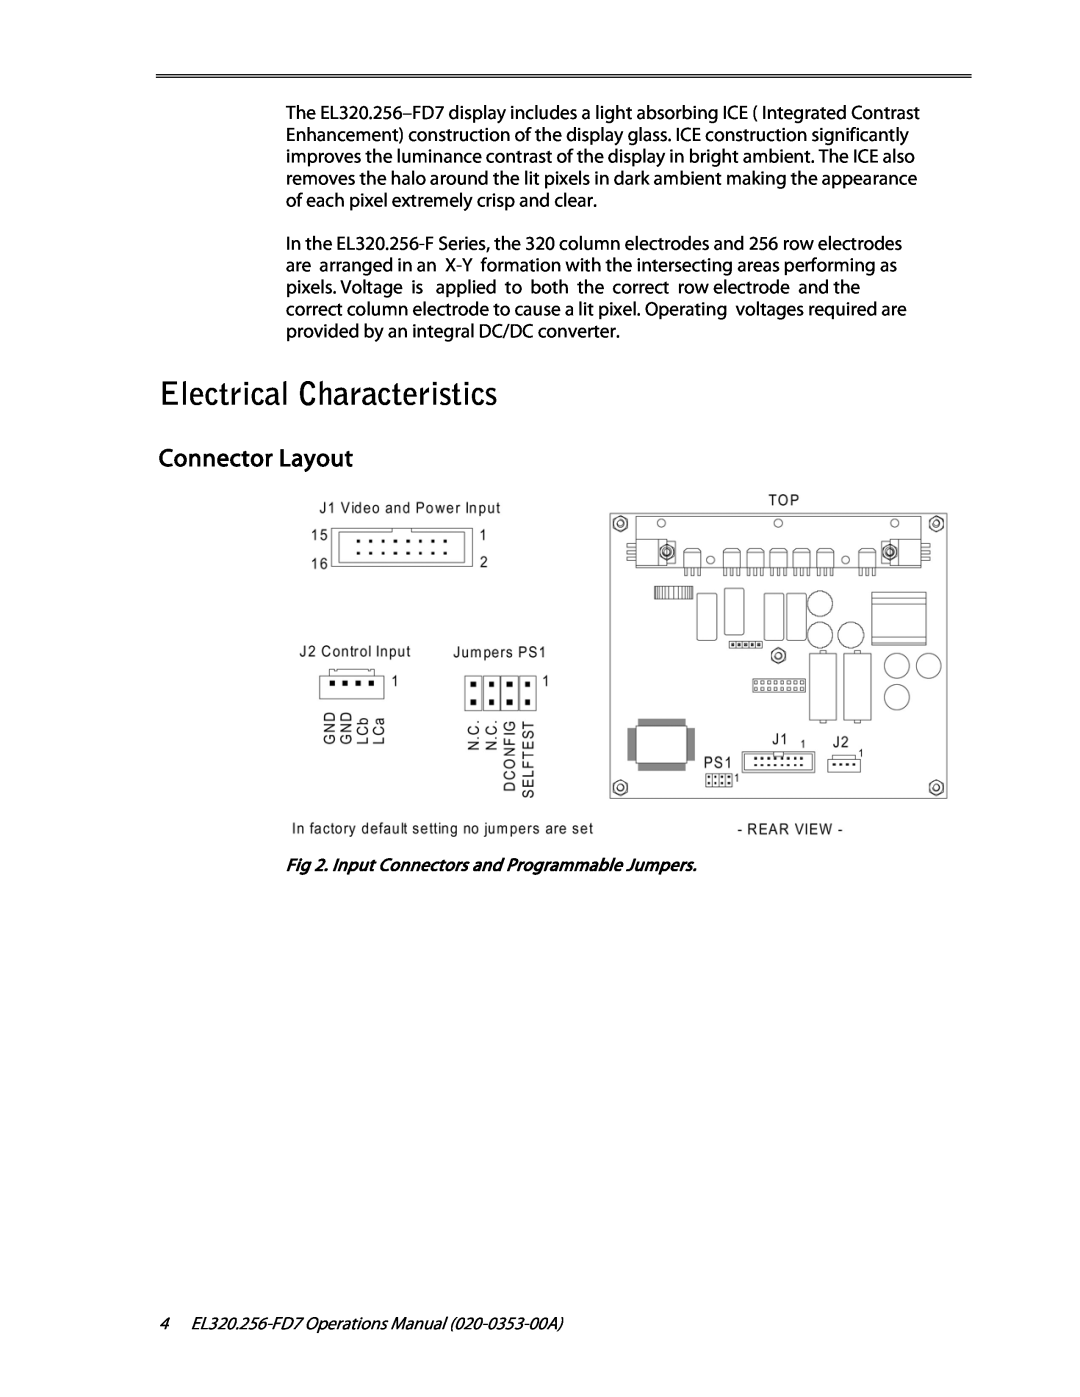 Planar High Contrast Display, High Brightness, EL320.256-FD7 user manual Electrical Characteristics, Connector Layout 